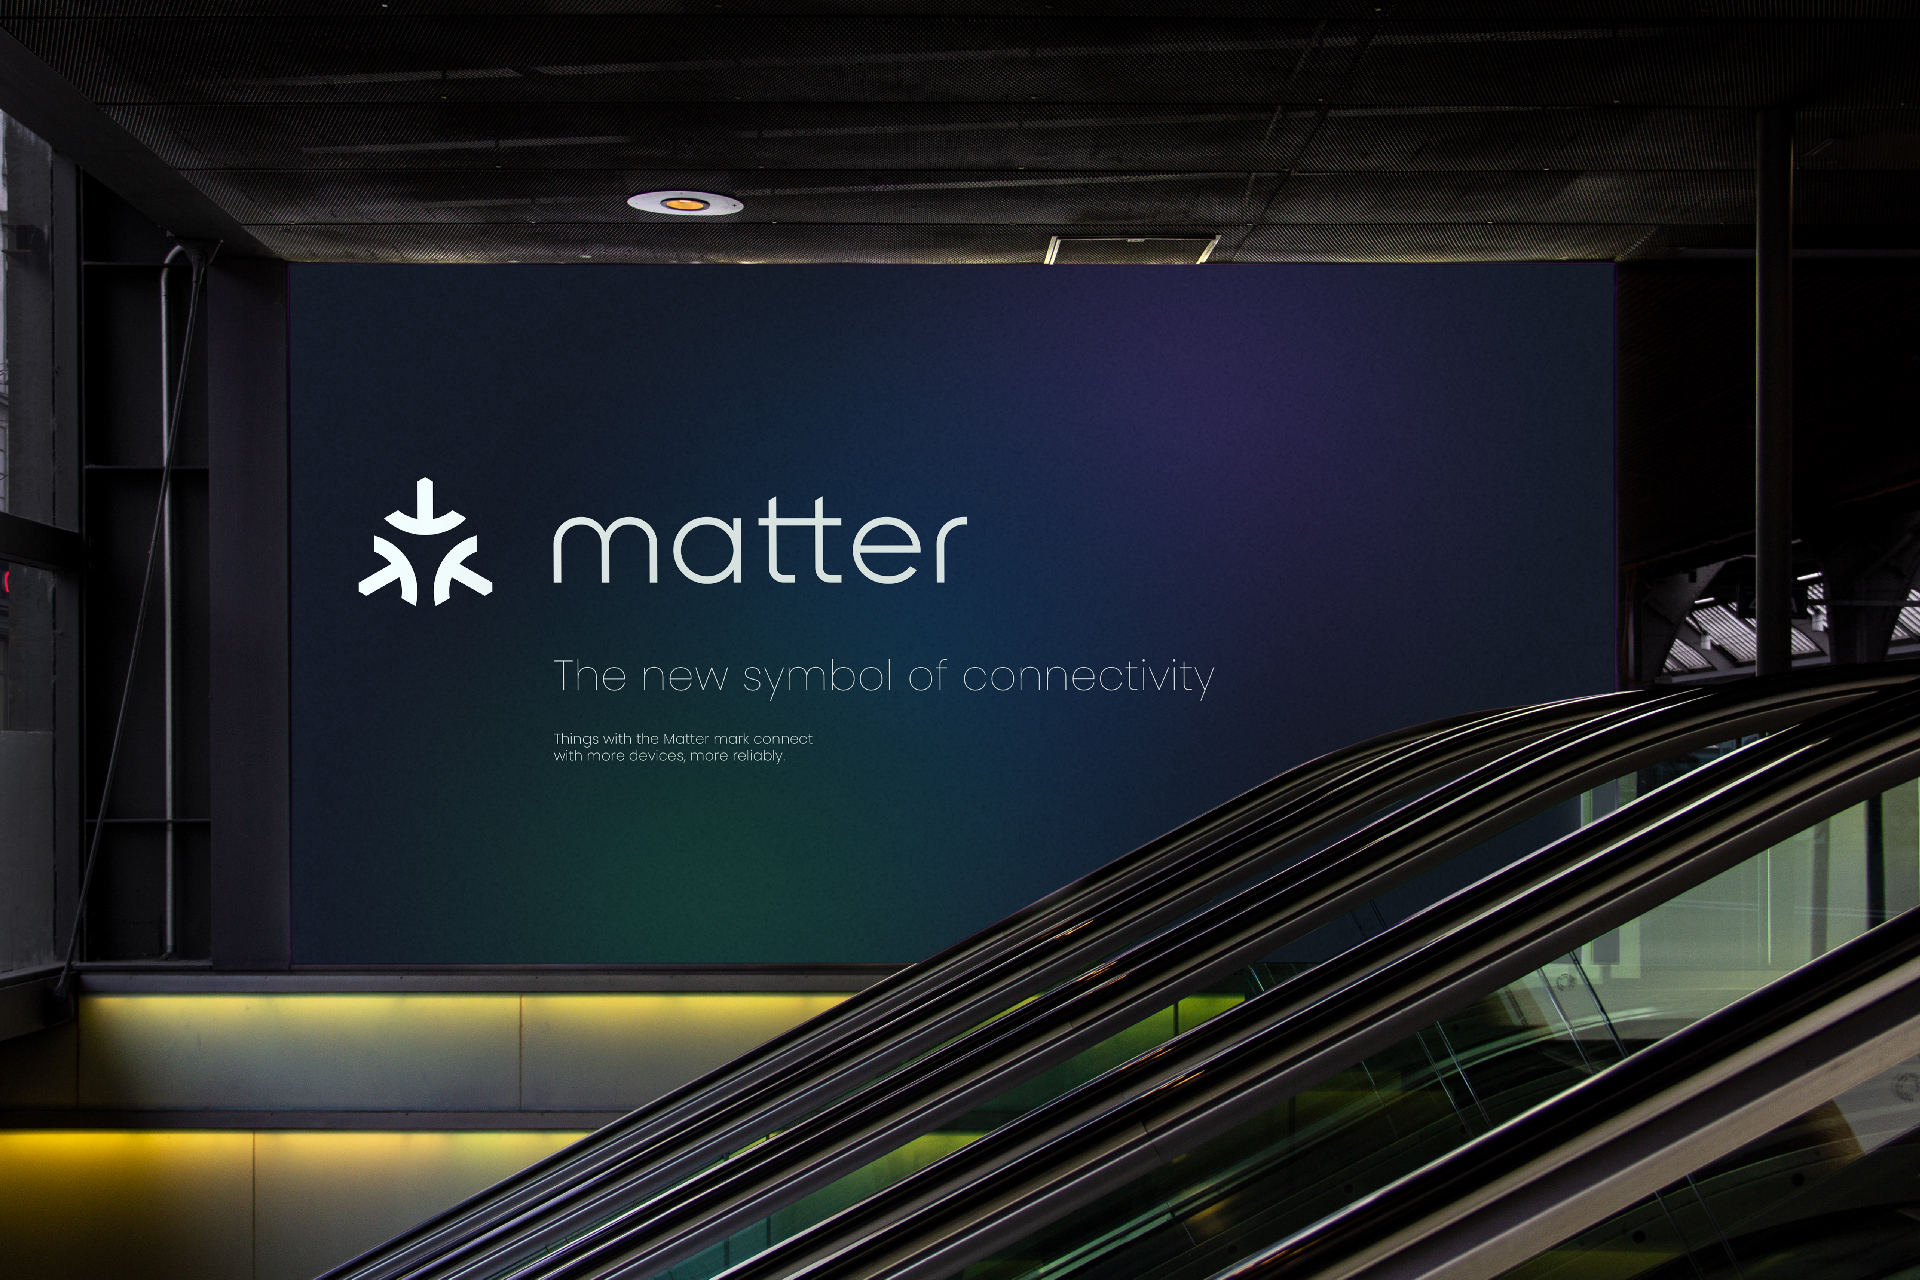 Matter brand identity across billboard 